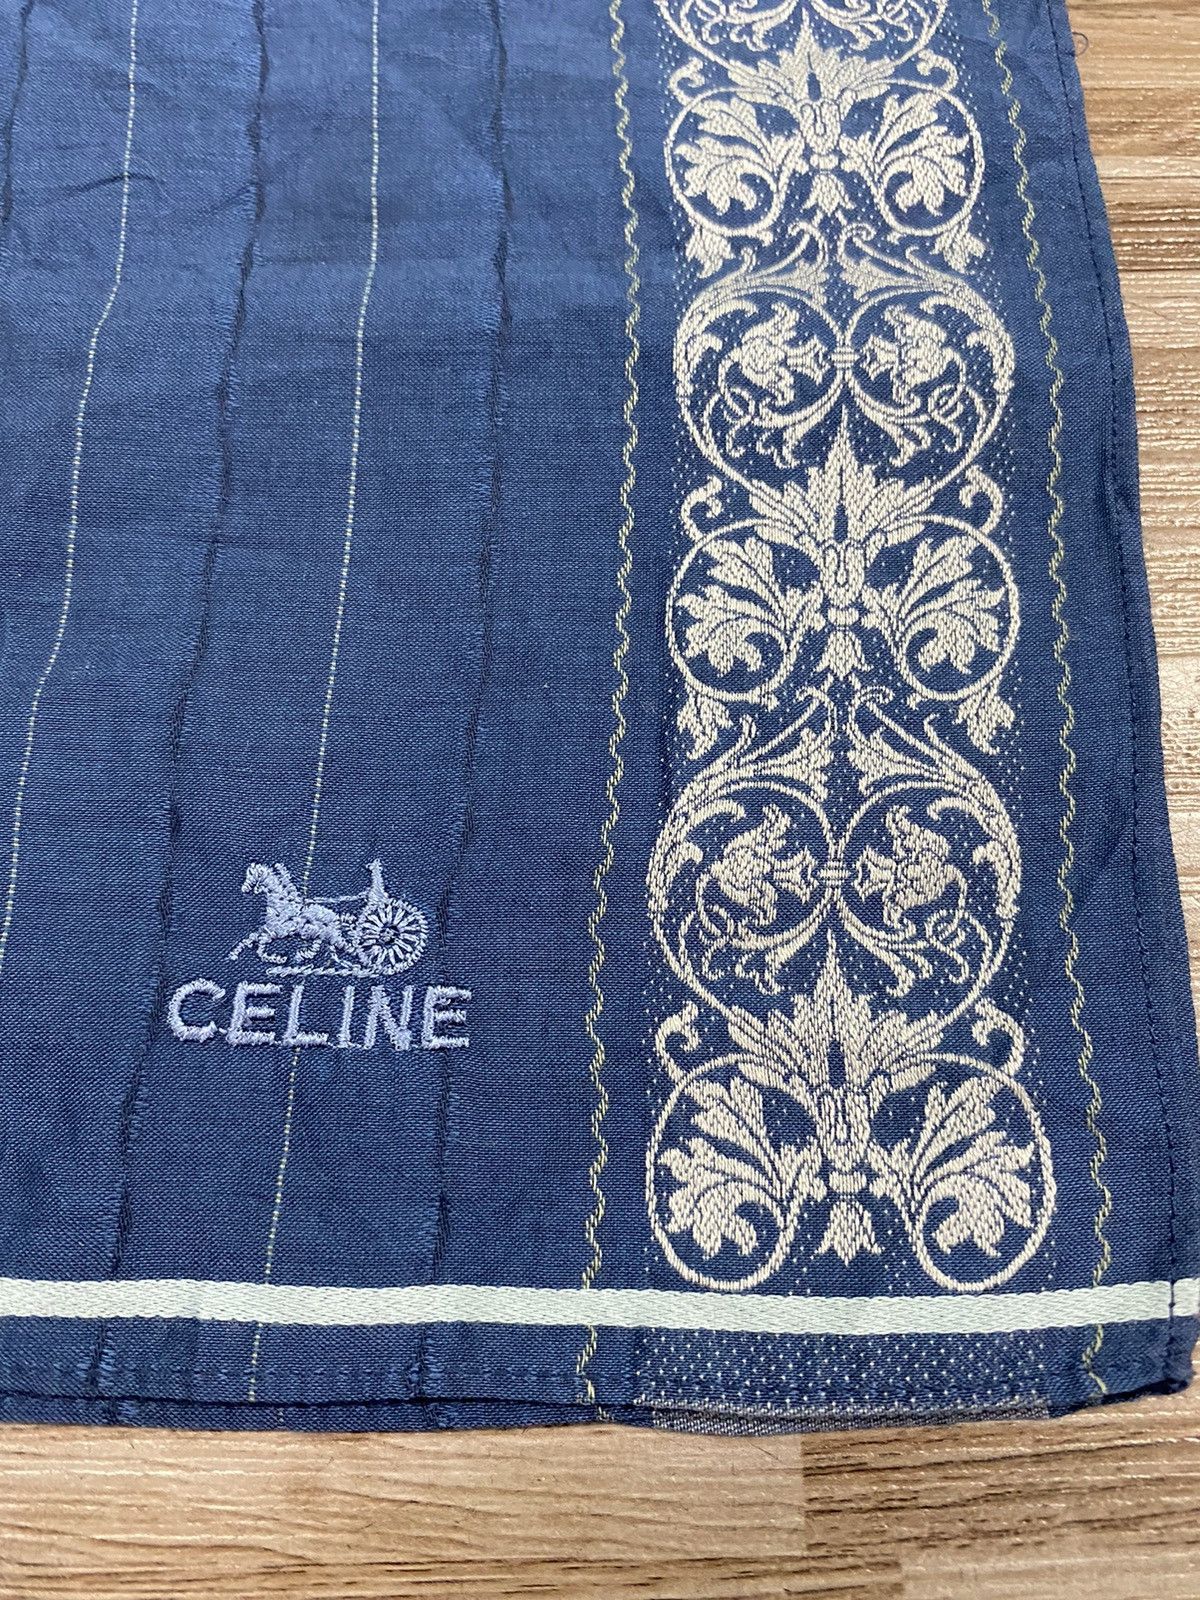 Combo Sale Fendi Burberry Celine Handkerchief - 8